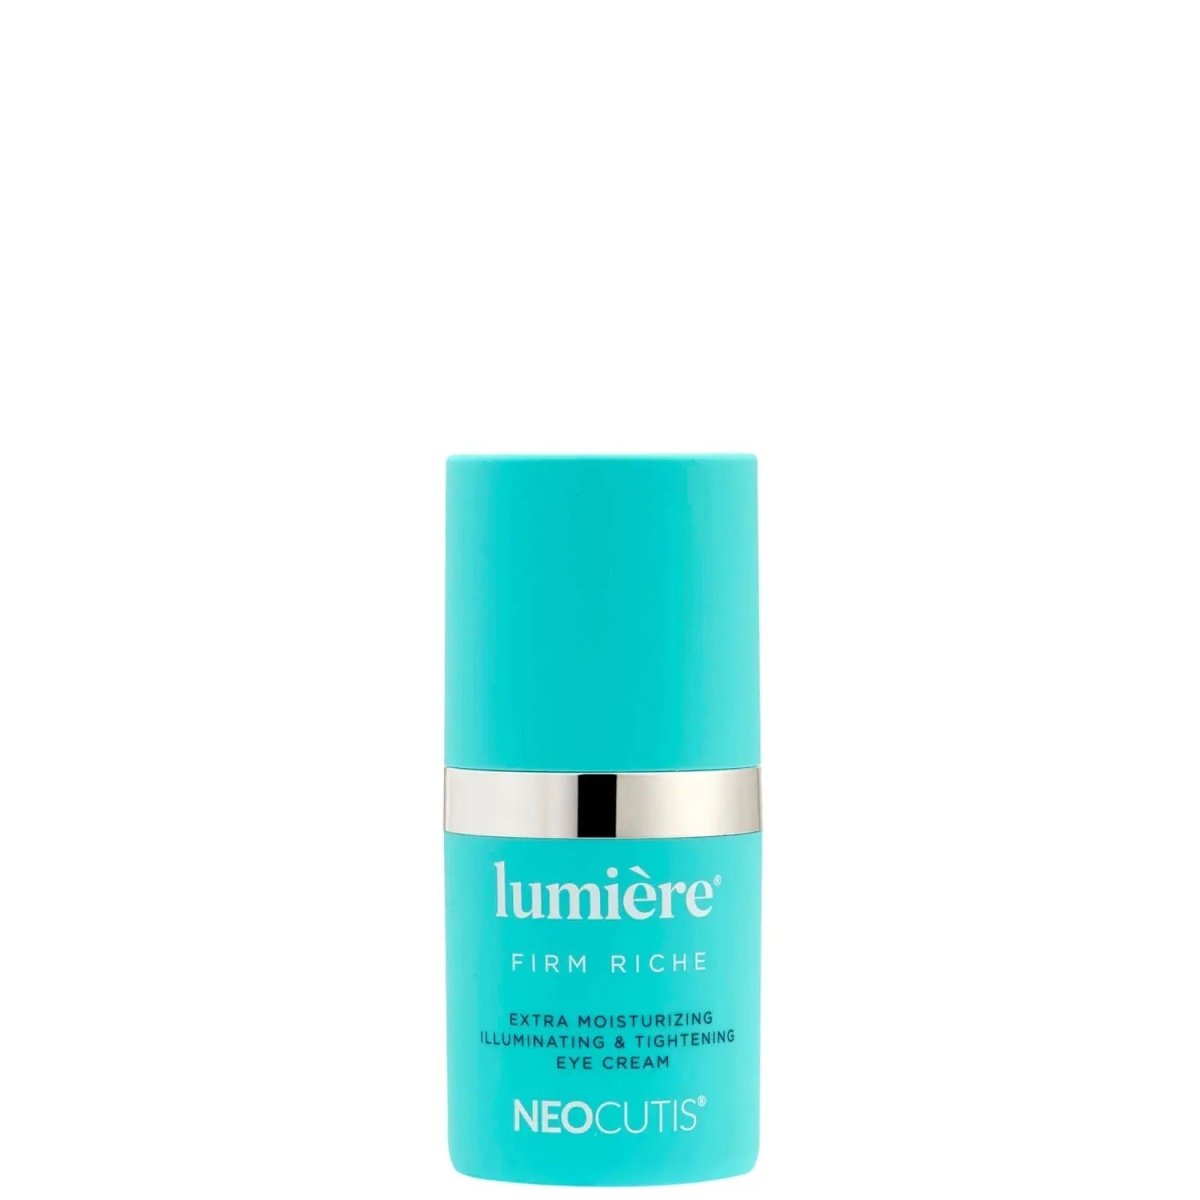 Neocutis LUMIERE FIRM RICHE - Extra Moisturizing Illuminating & Tightening Eye Cream